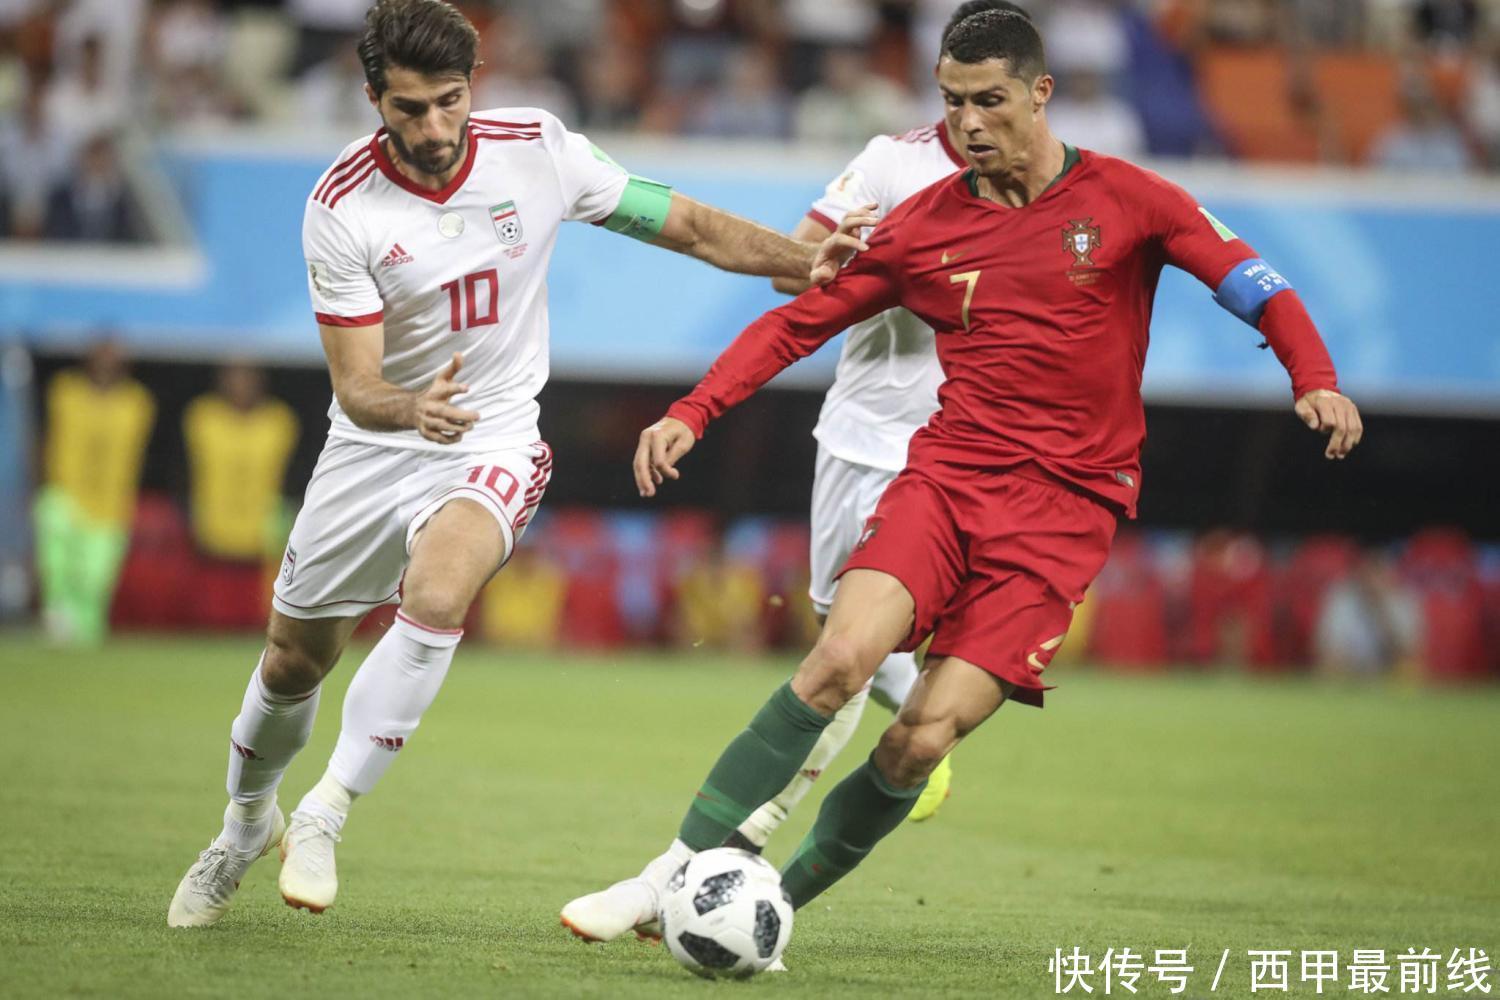 C罗恶意肘击伊朗球员逃红牌,葡萄牙球迷为其辩